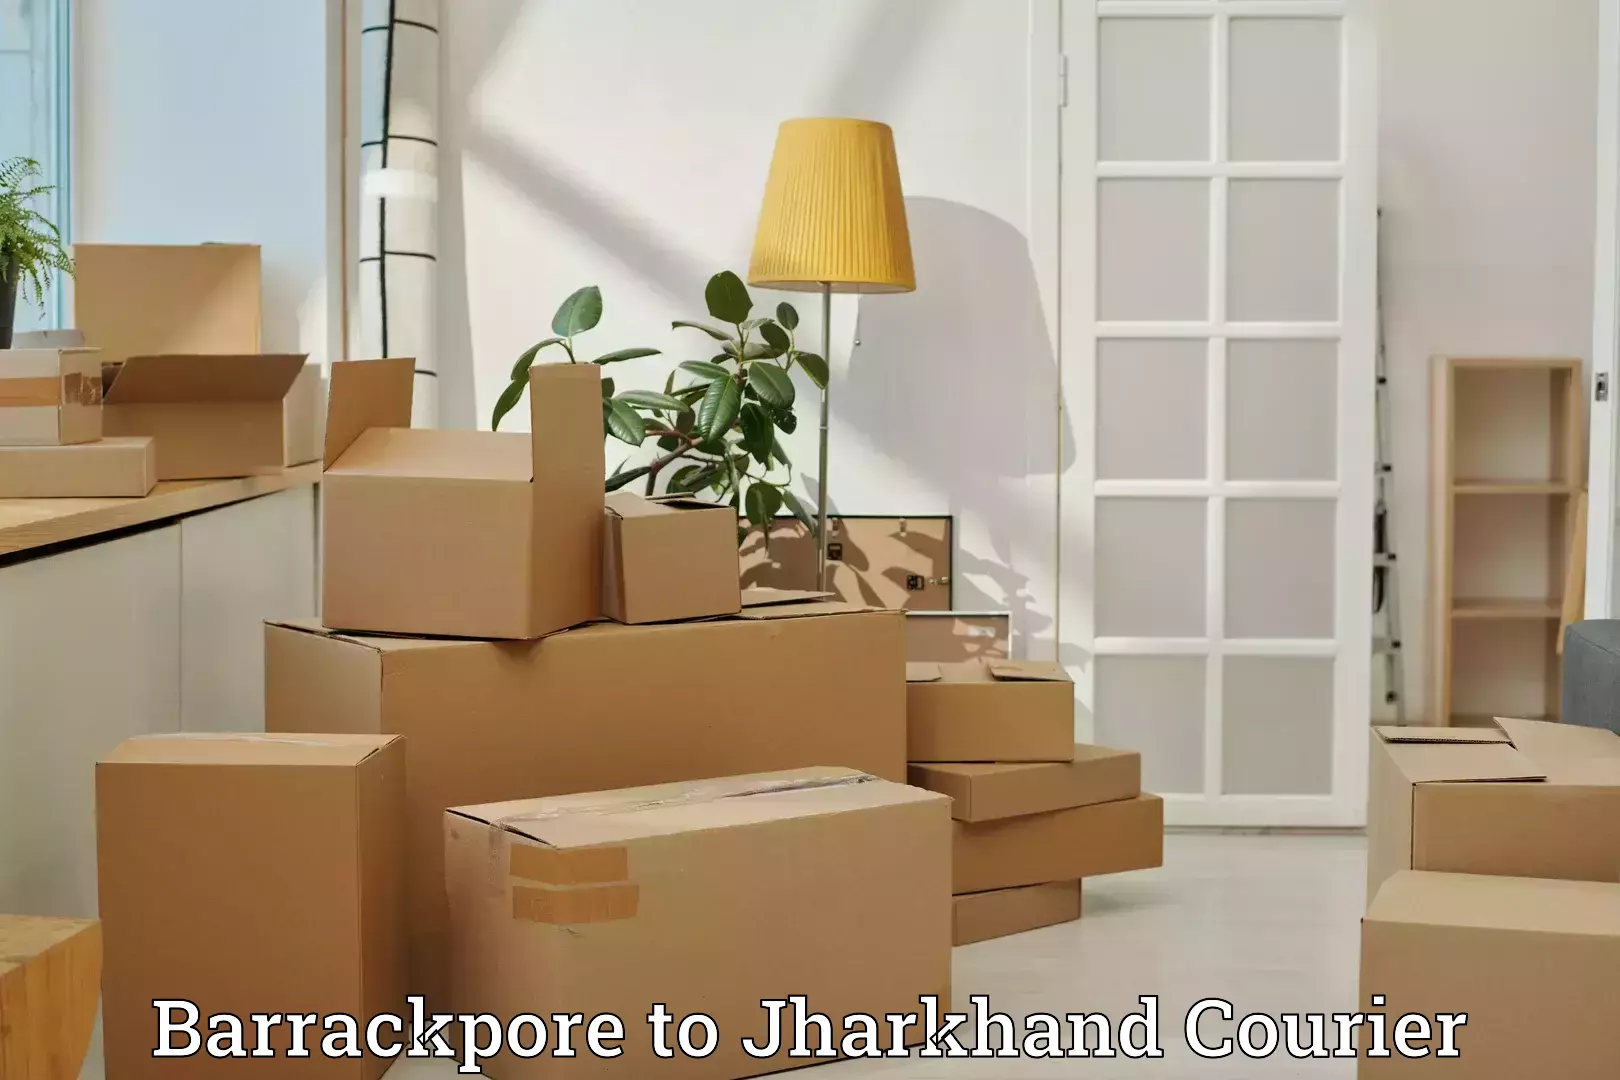 Luggage delivery network Barrackpore to Medininagar